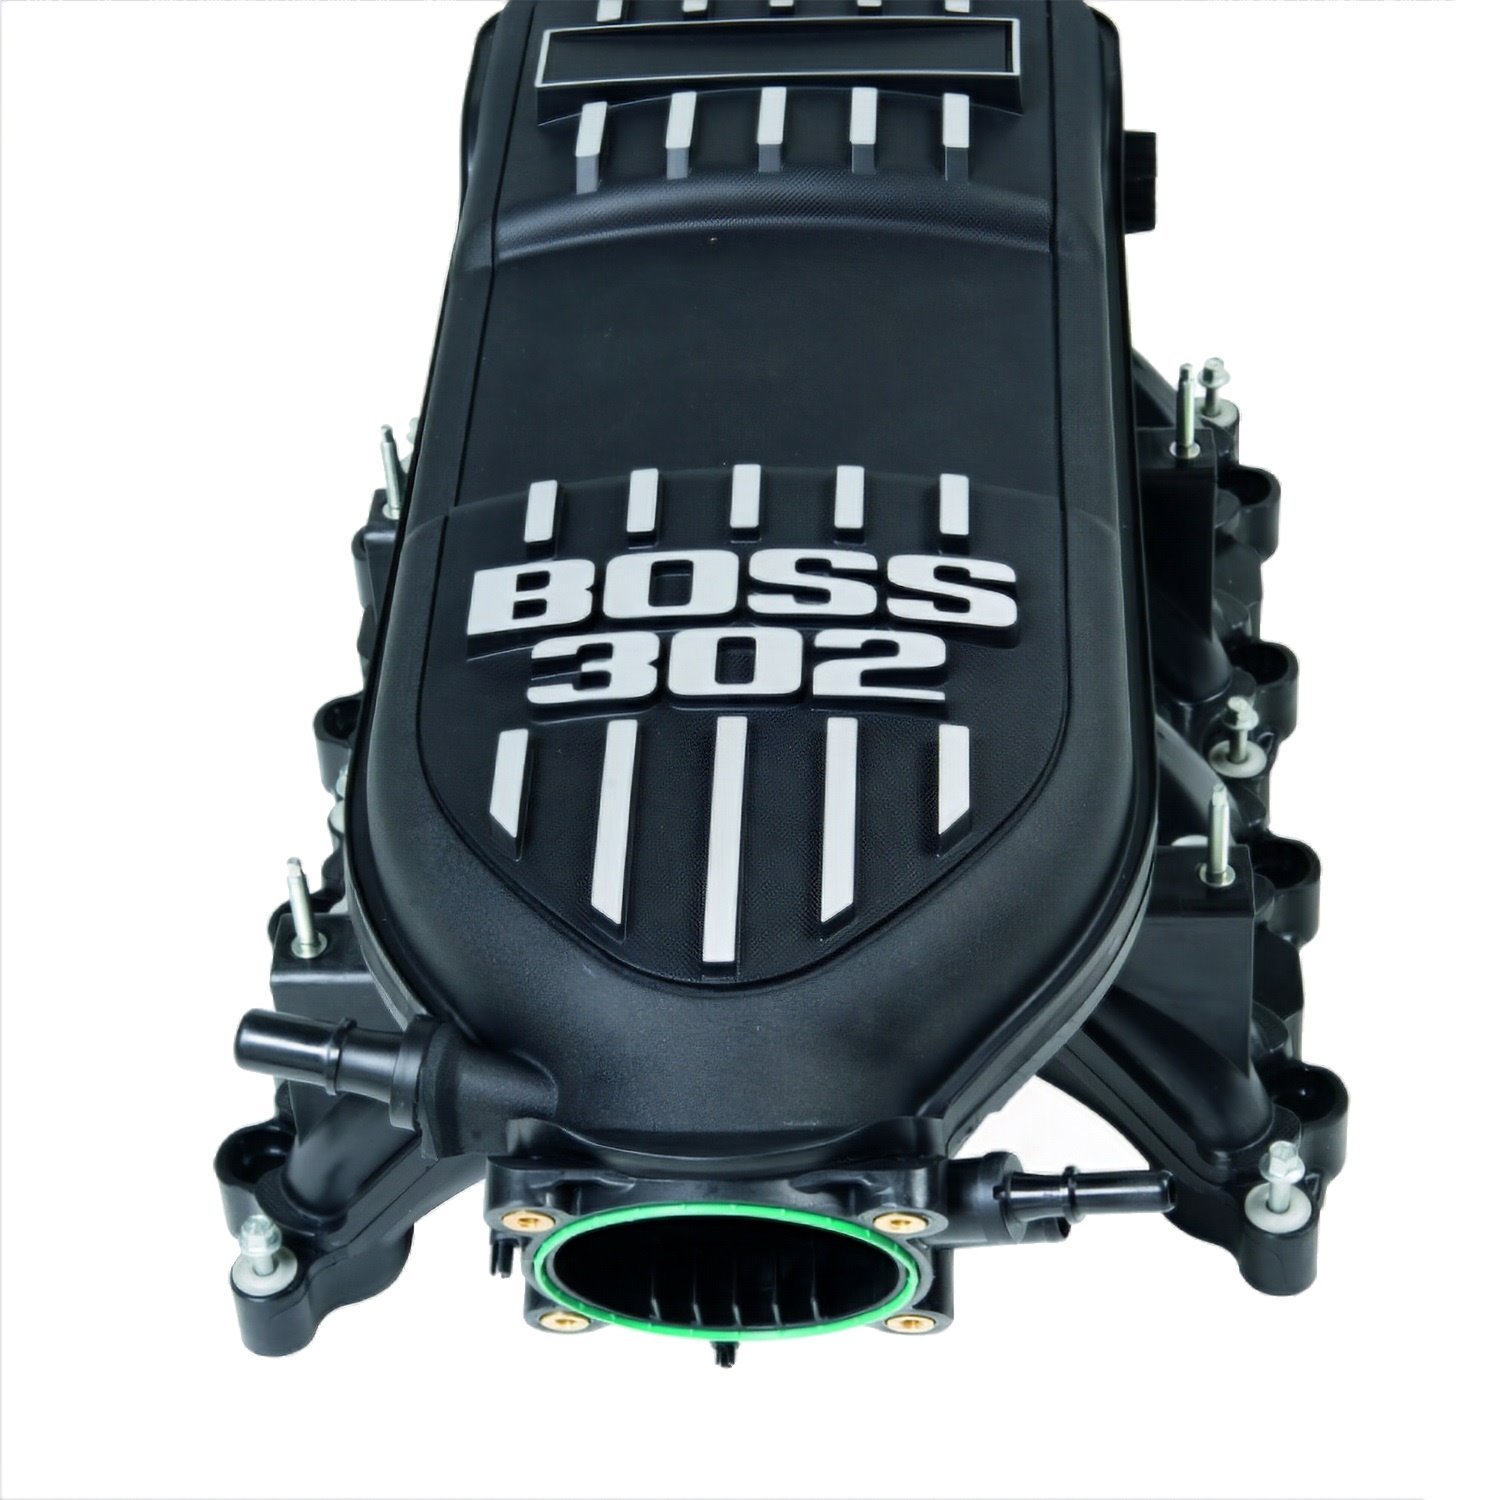 Boss 302 Intake Manifold 2011-14 Mustang 5.0L 4V Engines